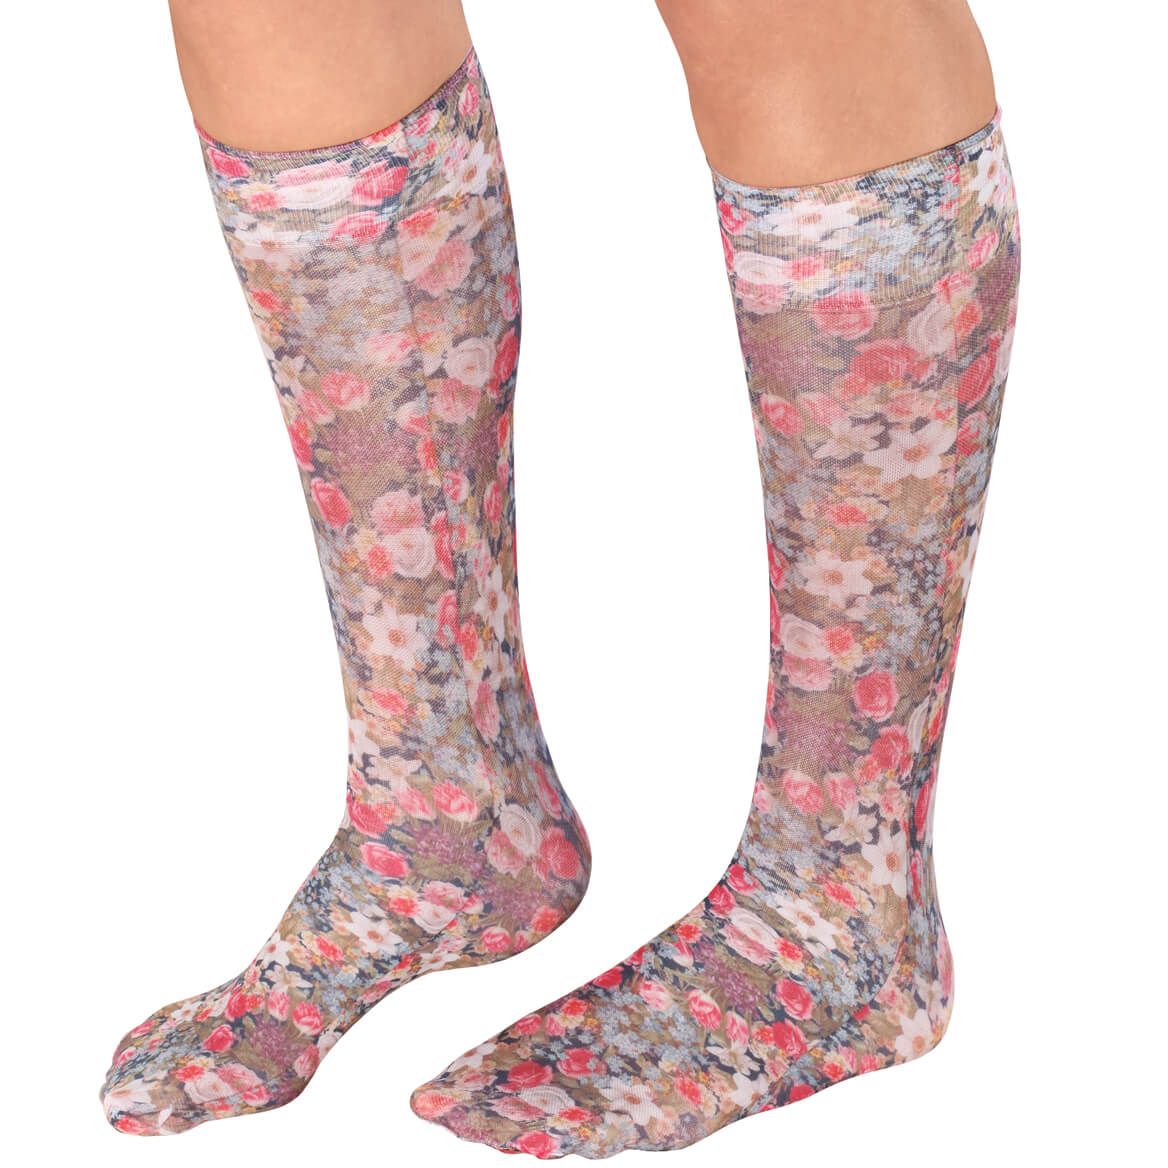 Celeste Stein Compression Socks 8-15mmHg + '-' + 352877